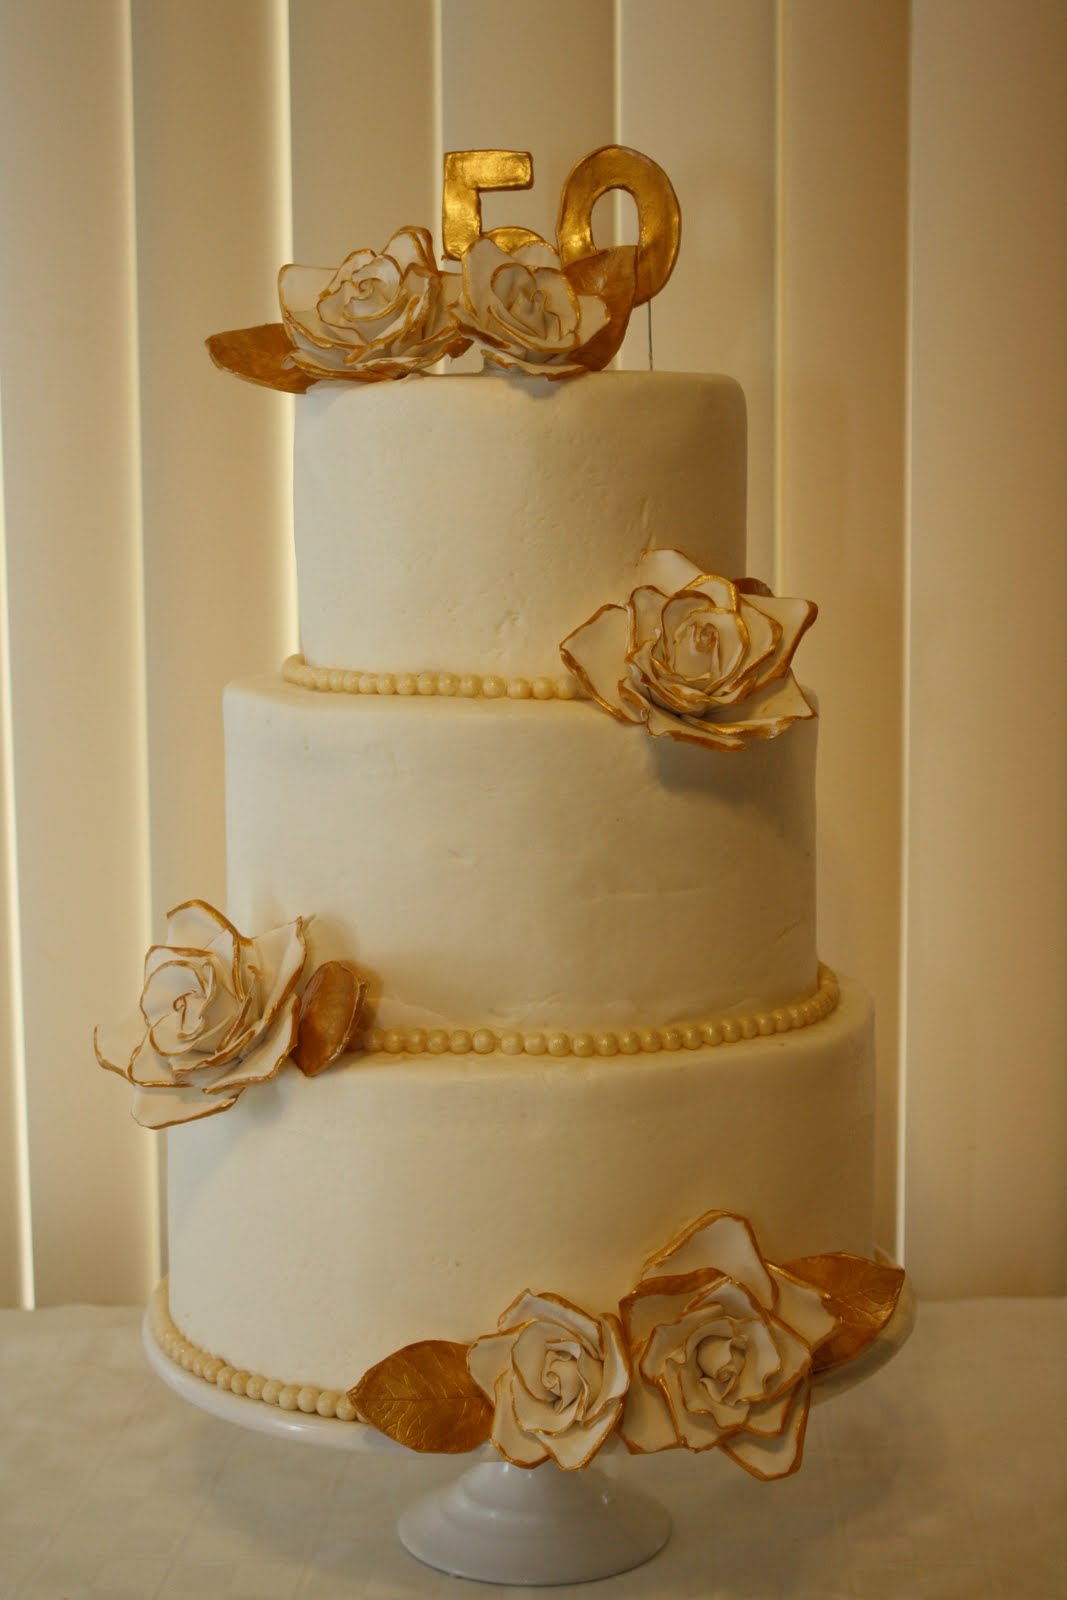 50th Wedding Anniversary Cakes Designs